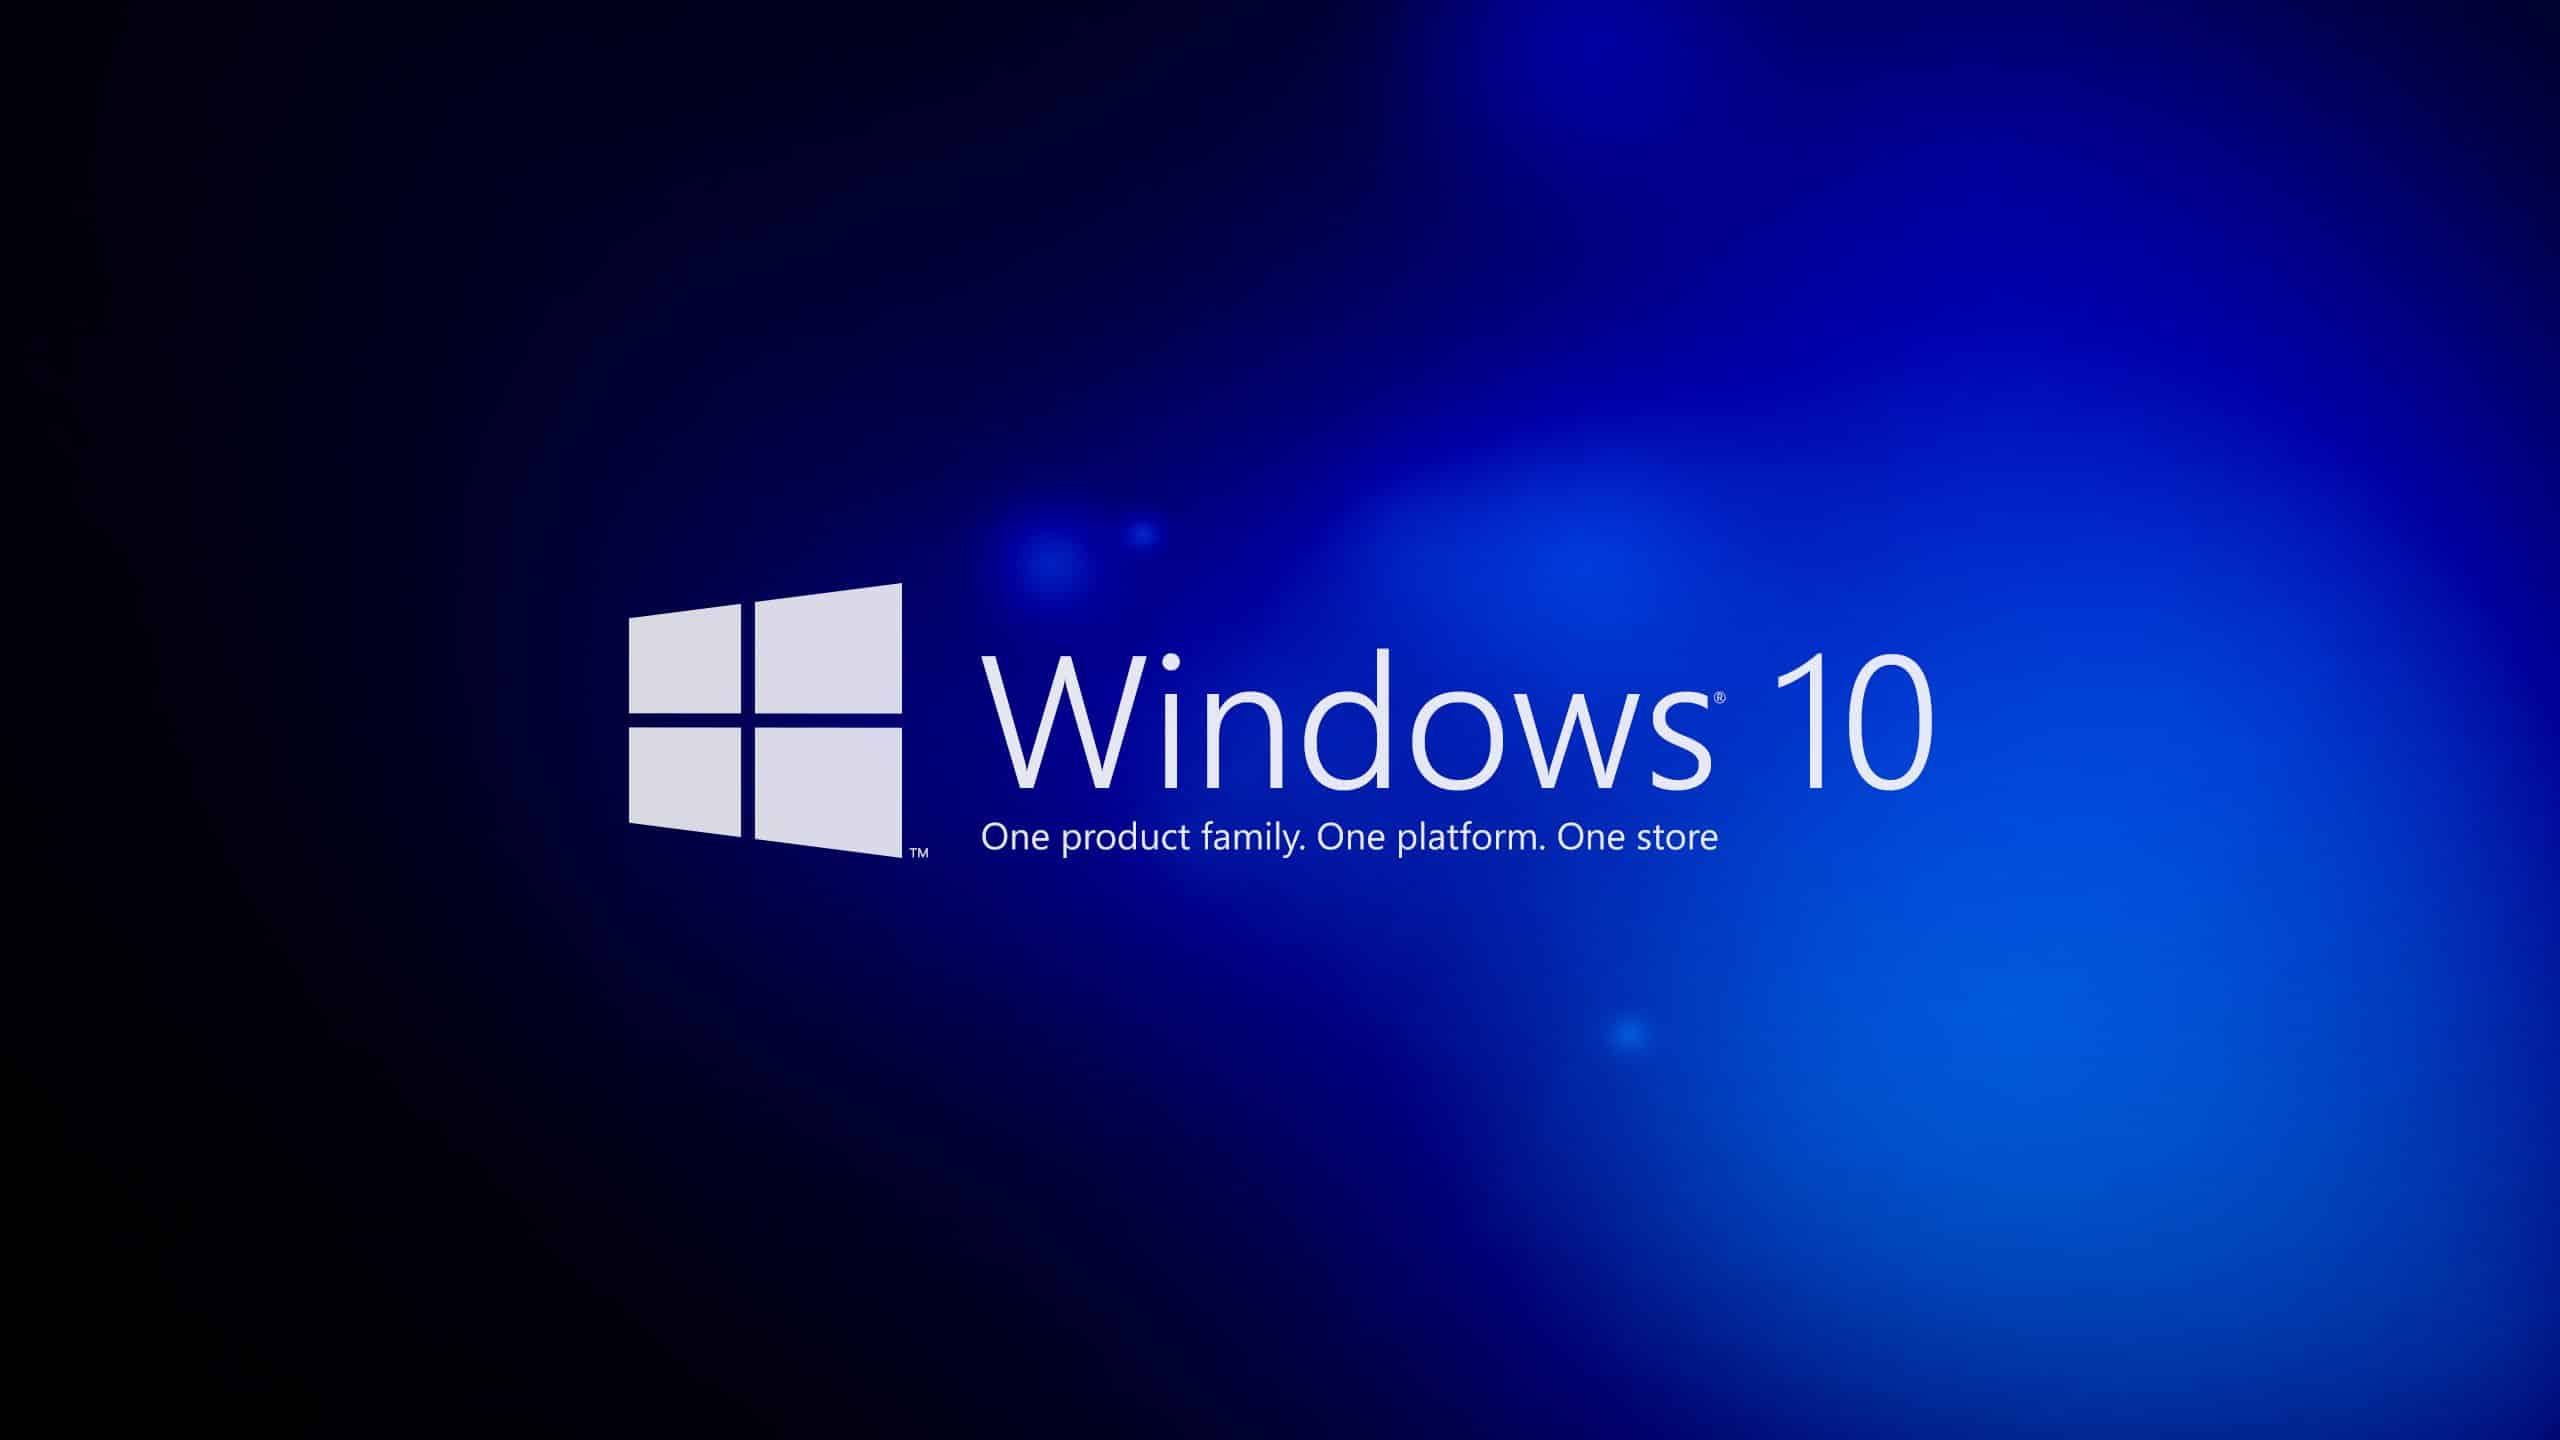 Come Scaricare Windows 10 con Key Originale Quasi Gratis